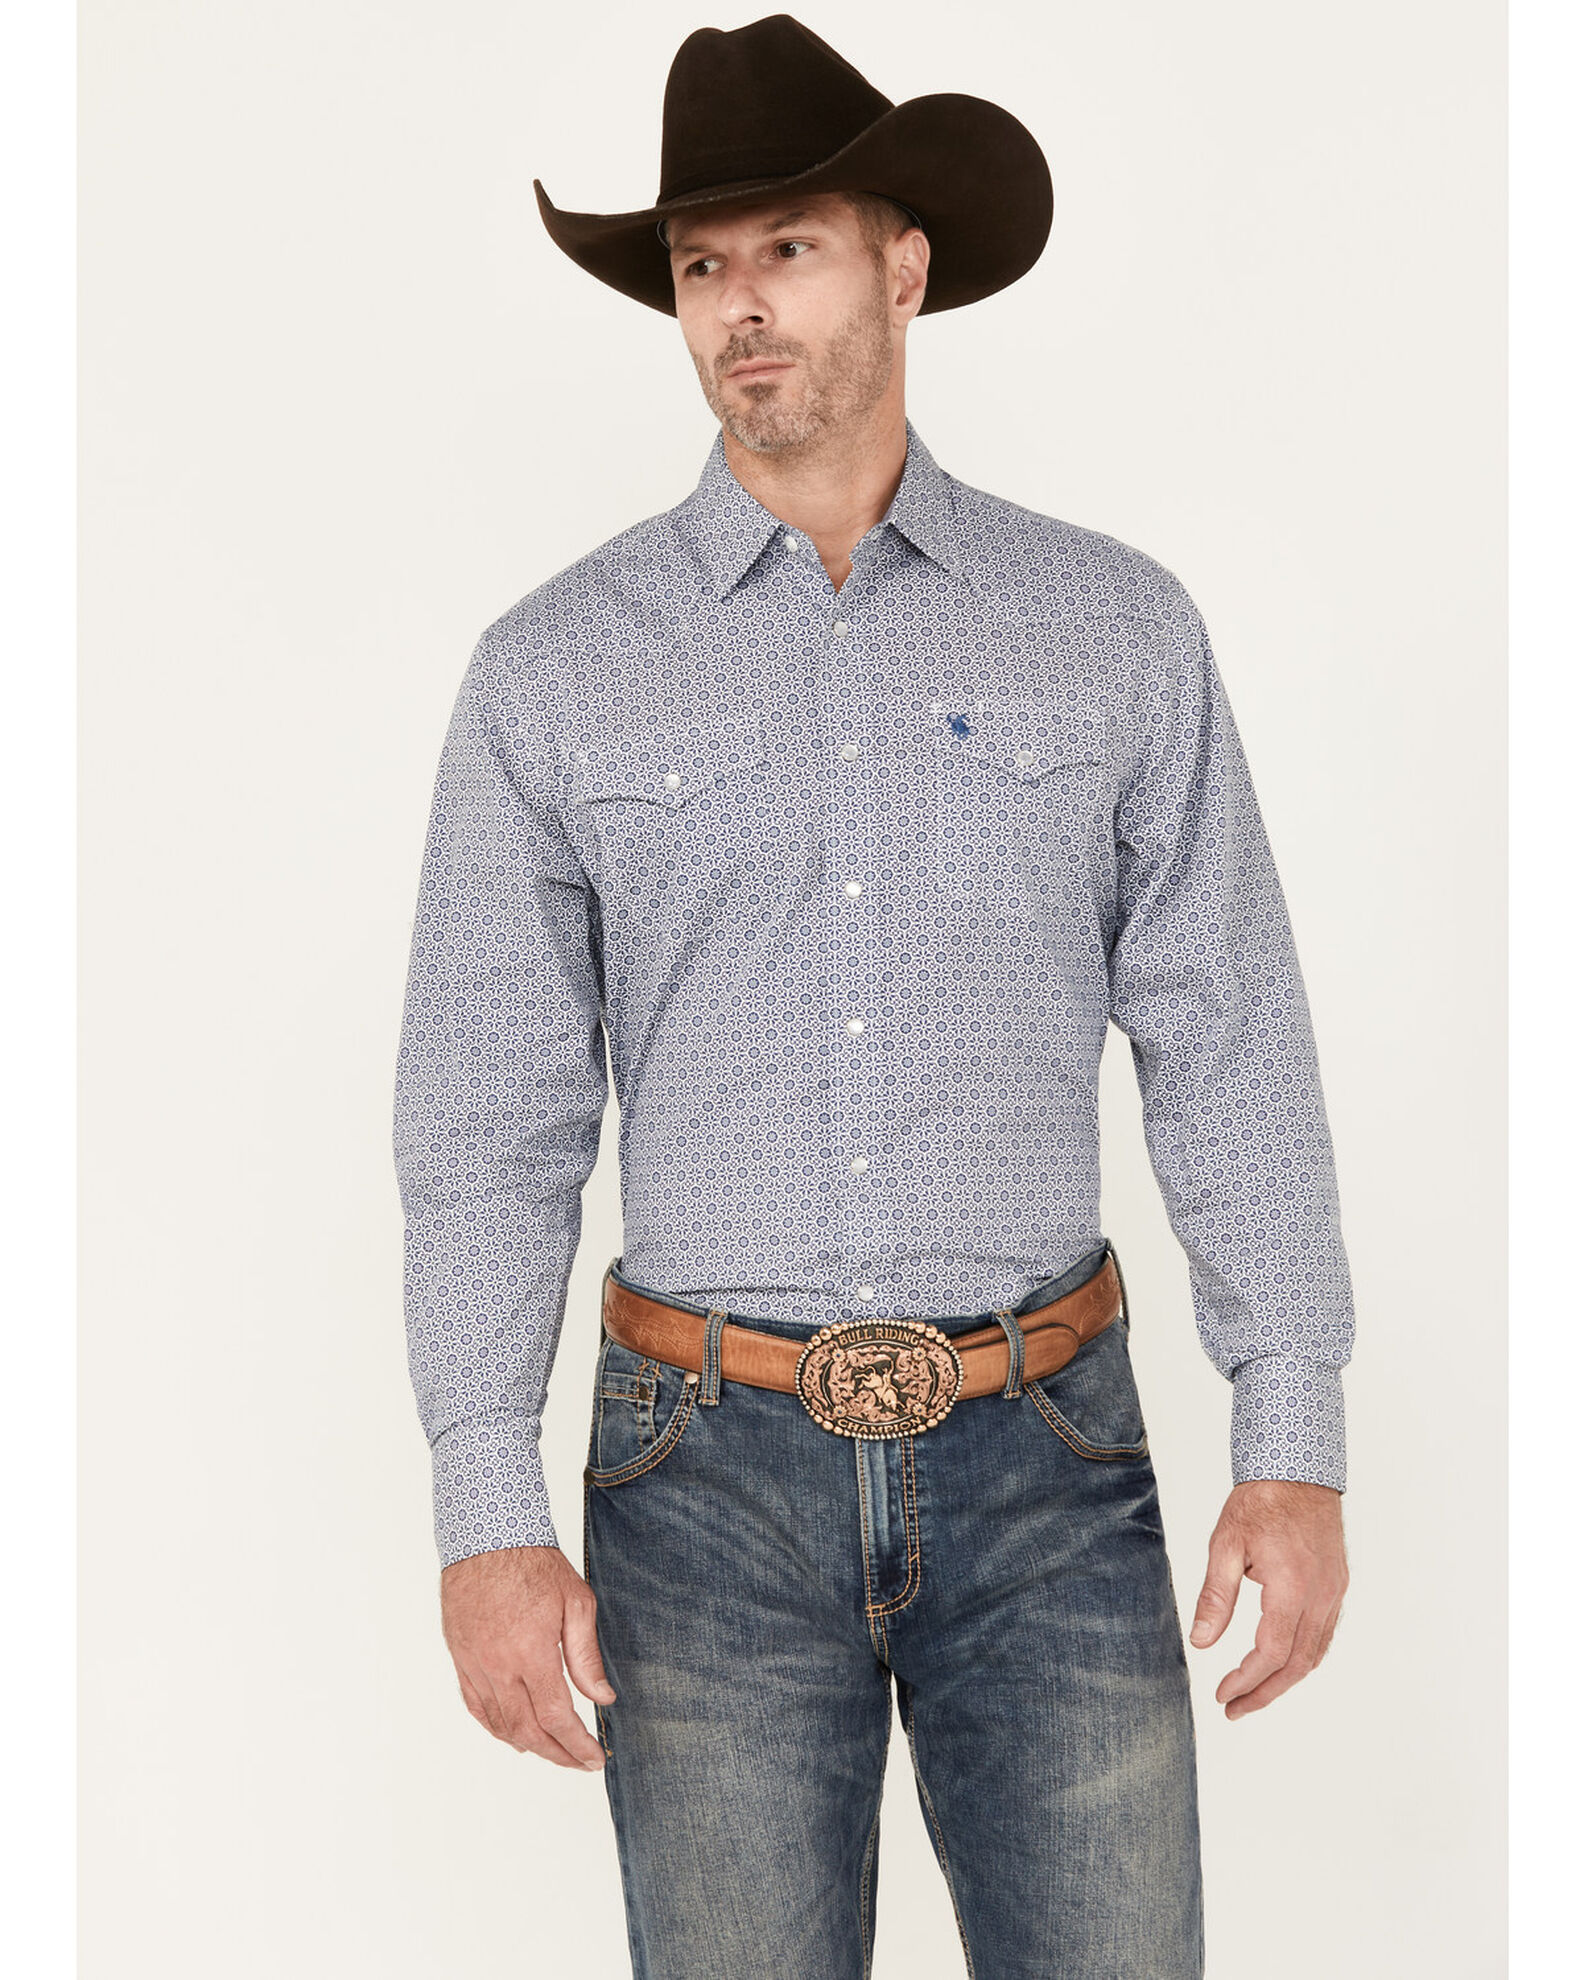 Rodeo Clothing Men's Medallion Print Long Sleeve Pearl Snap Western Shirt